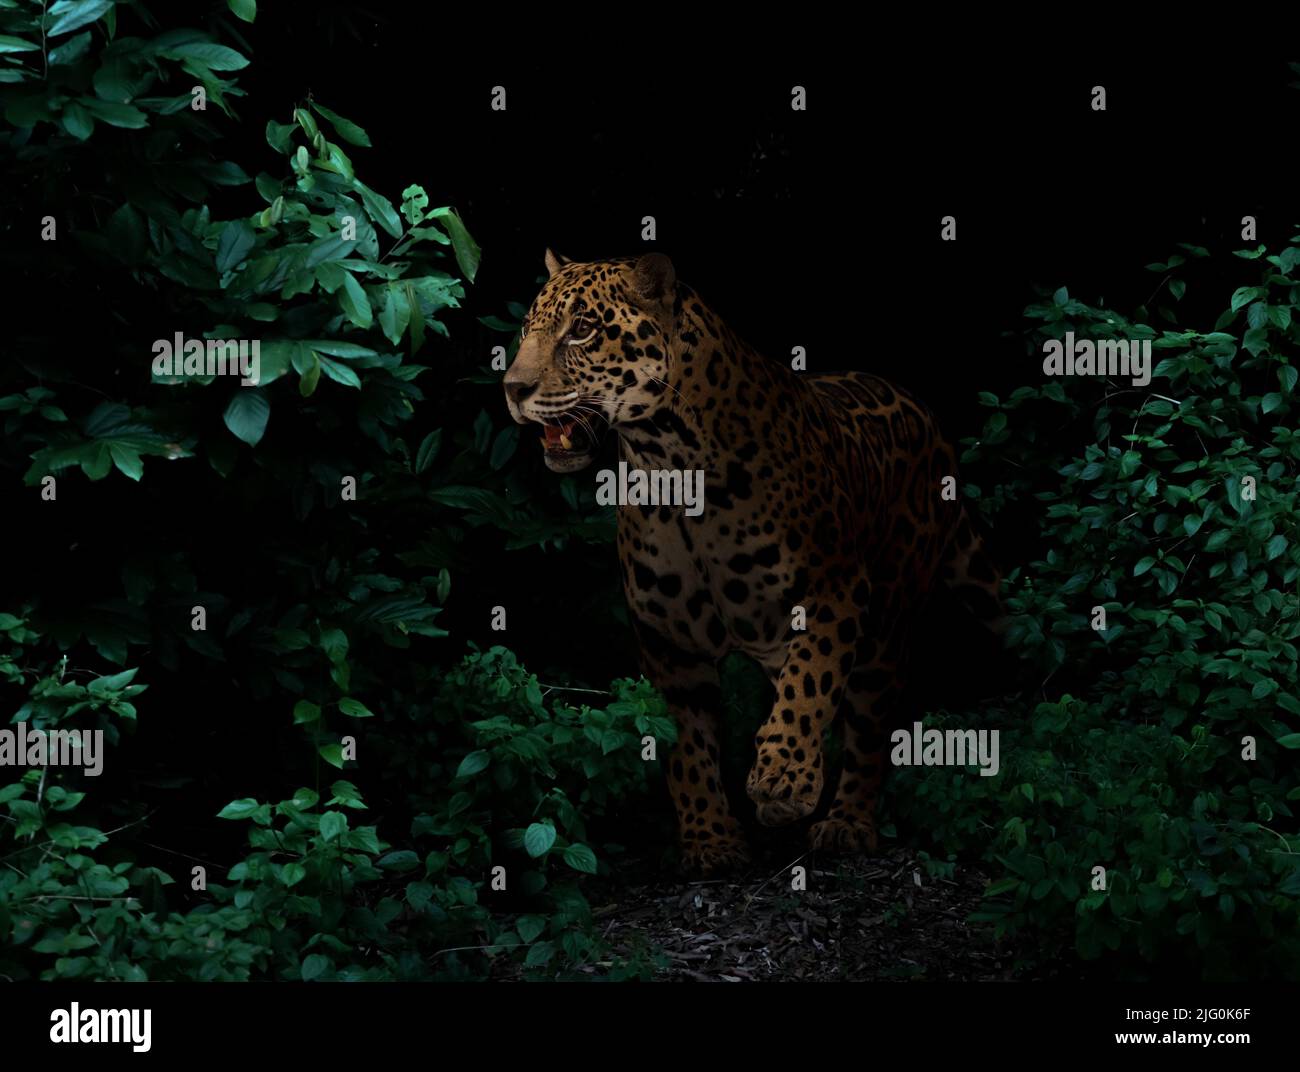 jaguar in tropical rainforest at night dark background Stock Photo